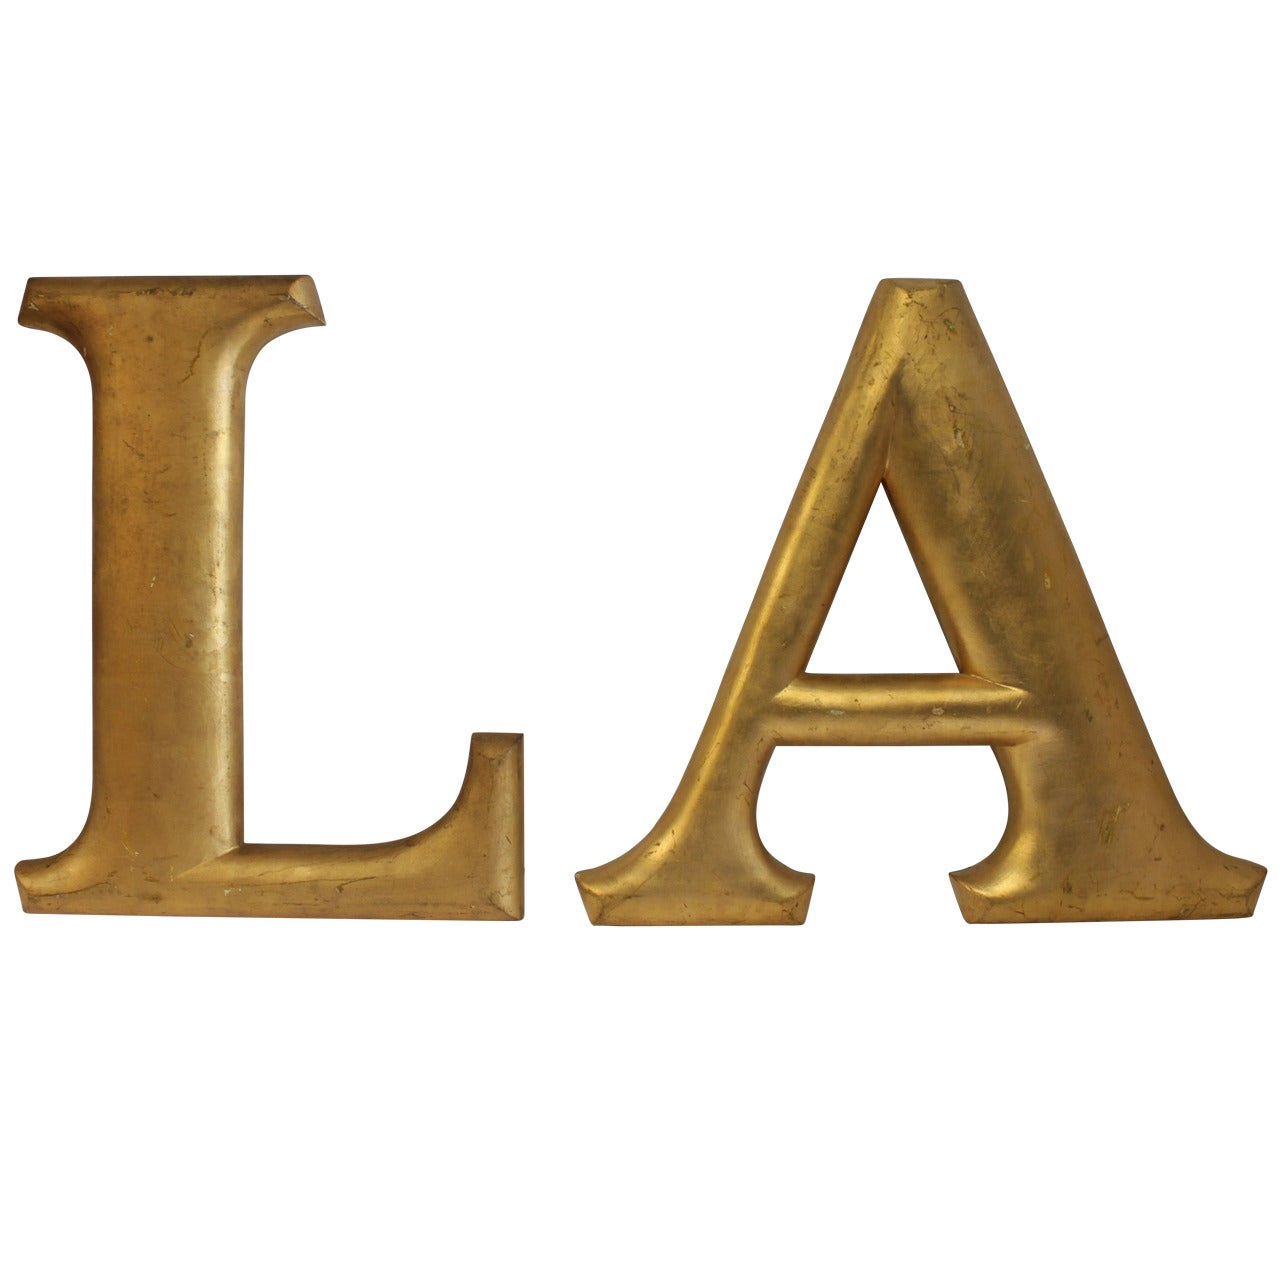 Large Antique Gold Leaf Wood Letters "LA" for Los Angeles For Sale